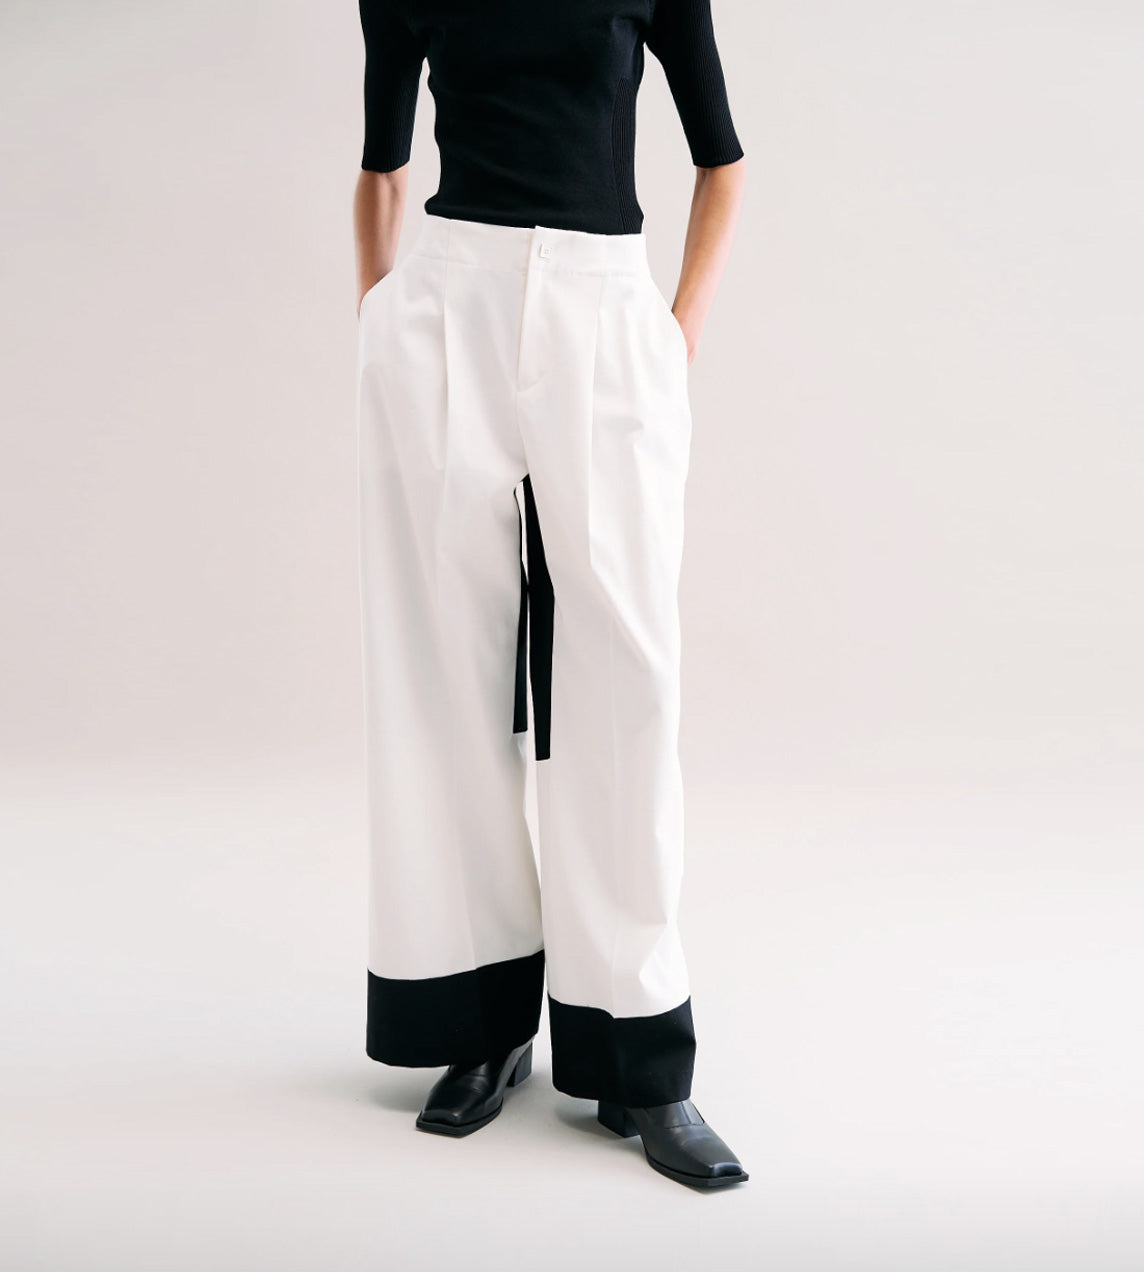 Issey Miyake - Square One Pants White/Black